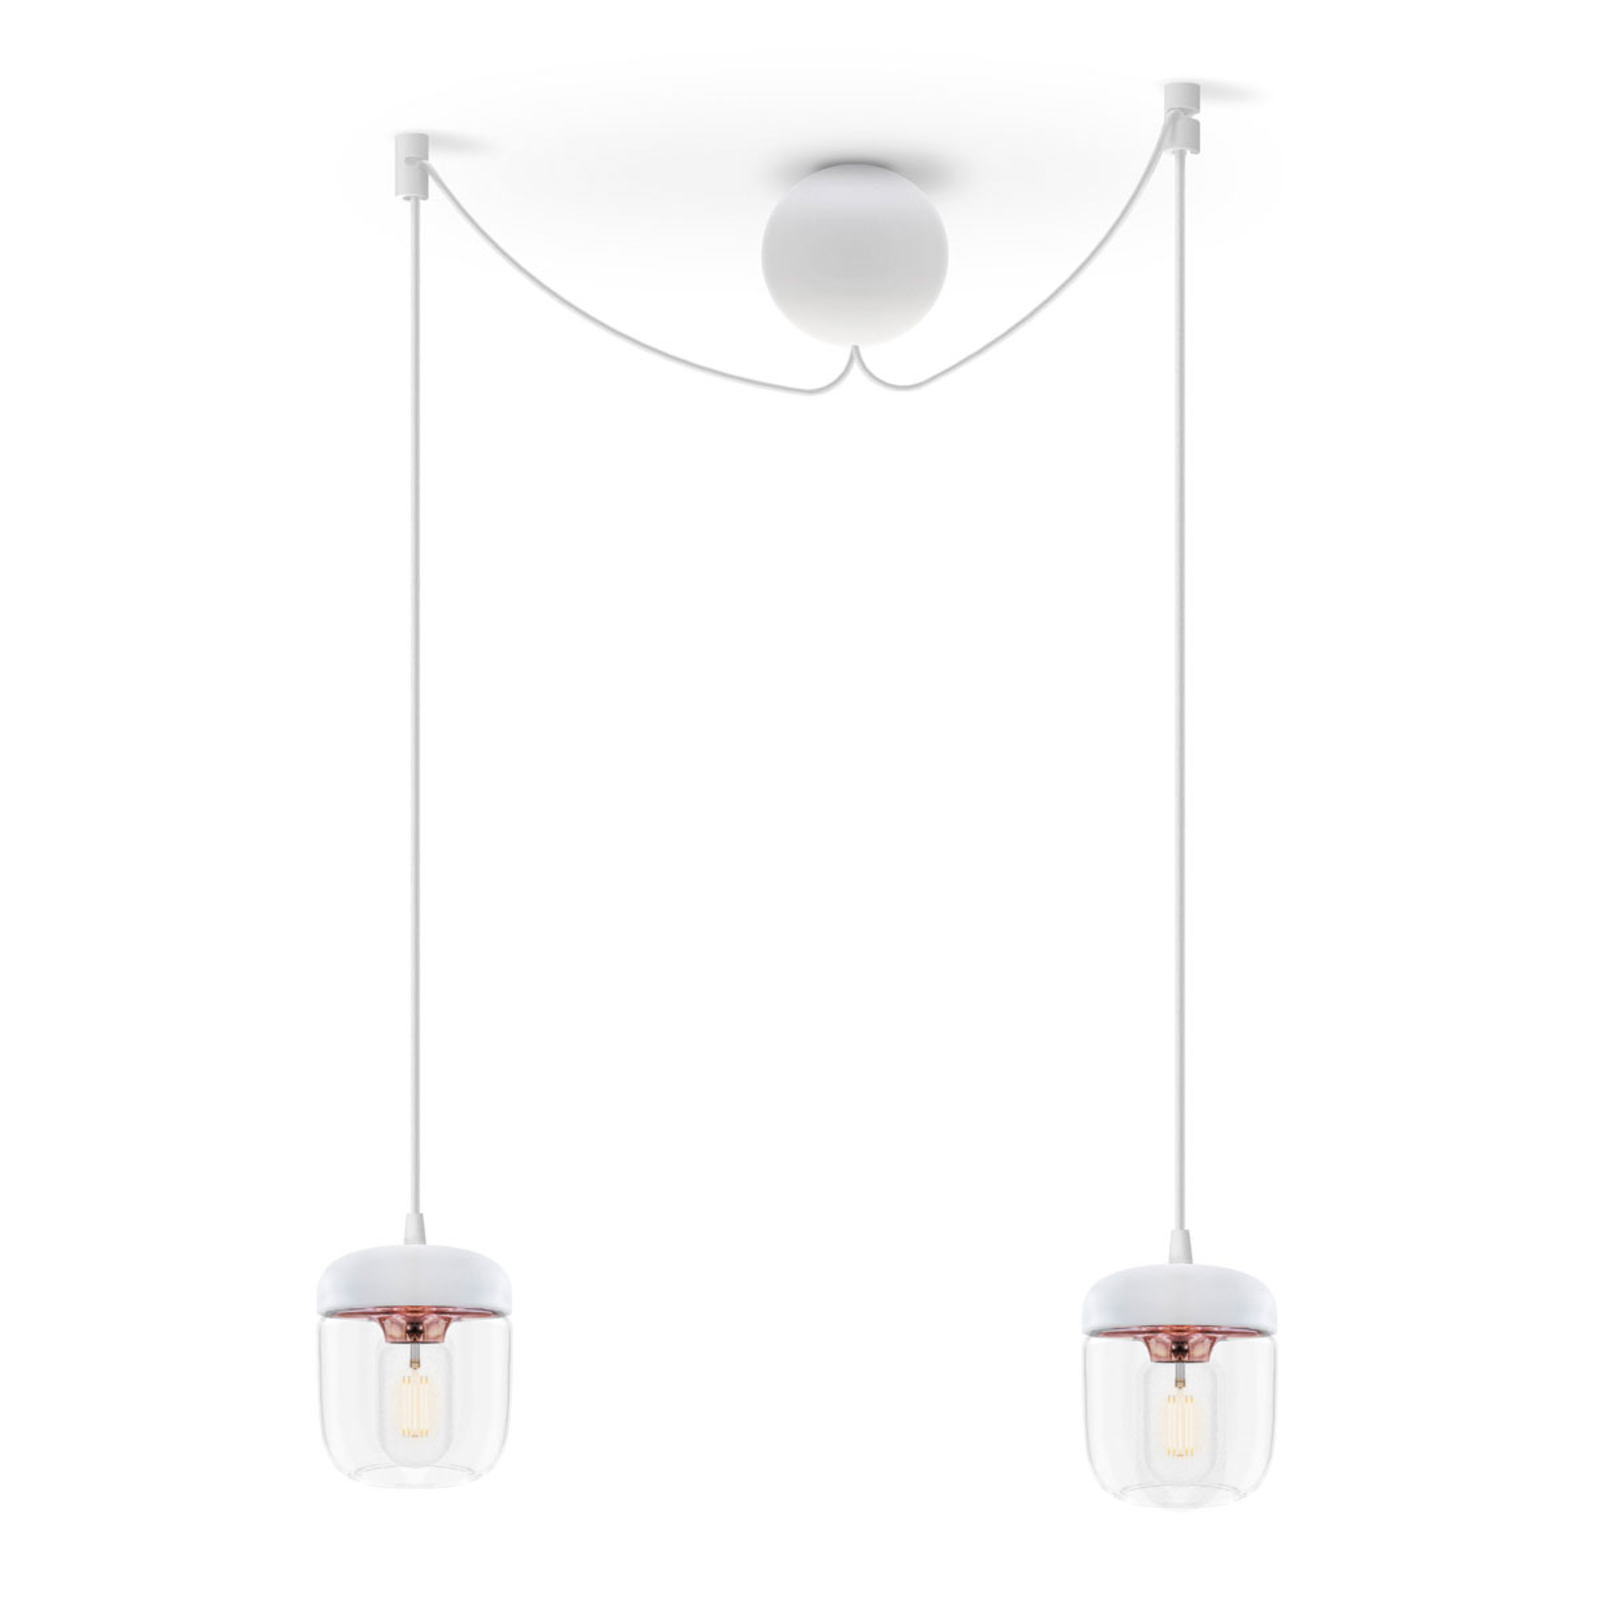 Outlook Touhou Verfrissend UMAGE hanglamp Acorn wit/koper, 2 lampen | Lampen24.be